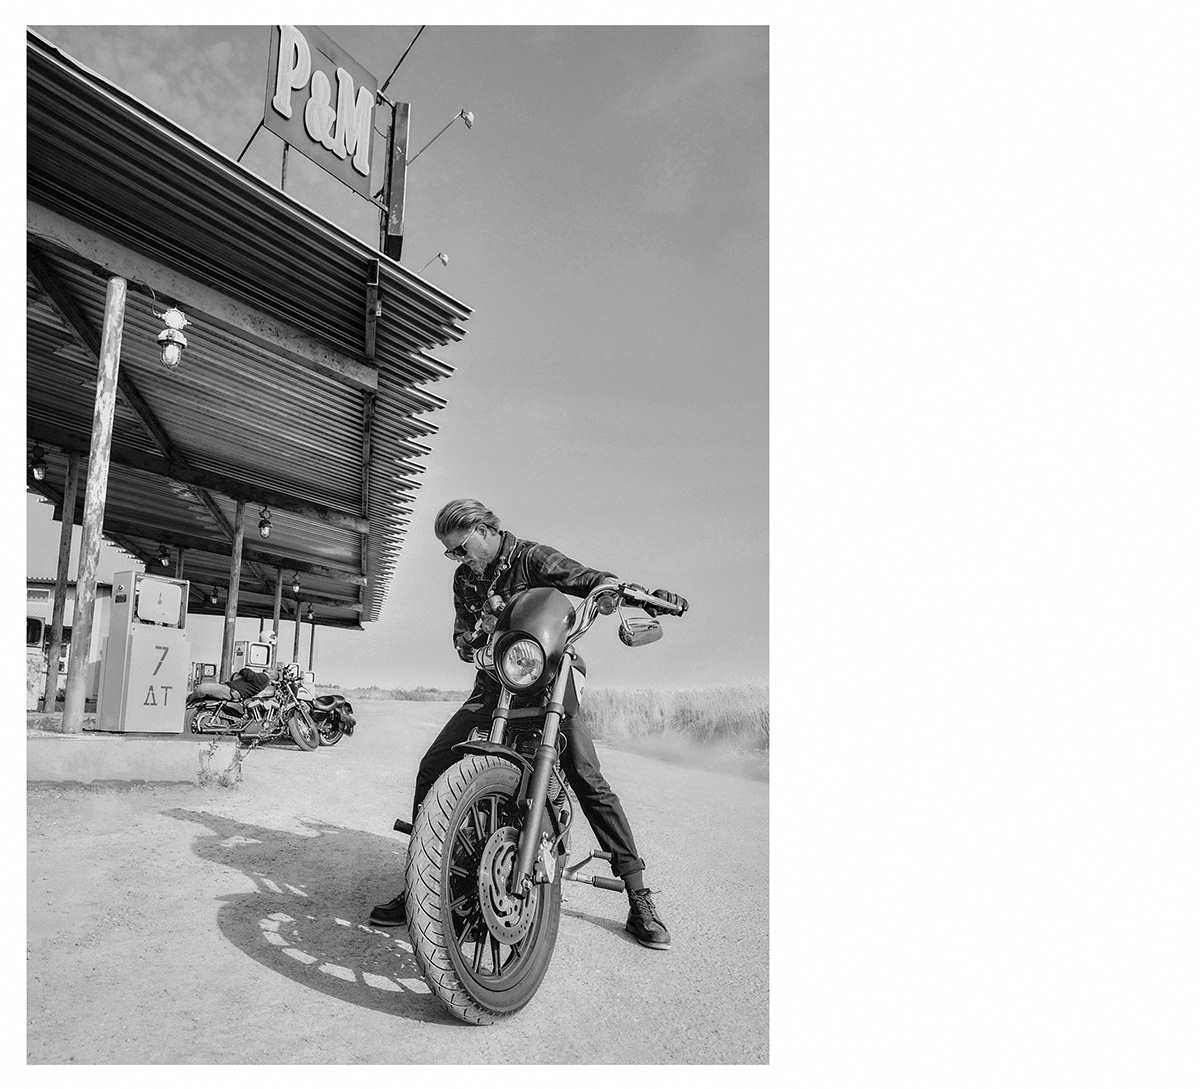 Bicycle Bike Harley Davidson lifestyle motorcycles Photography  photoshoot ride triumph